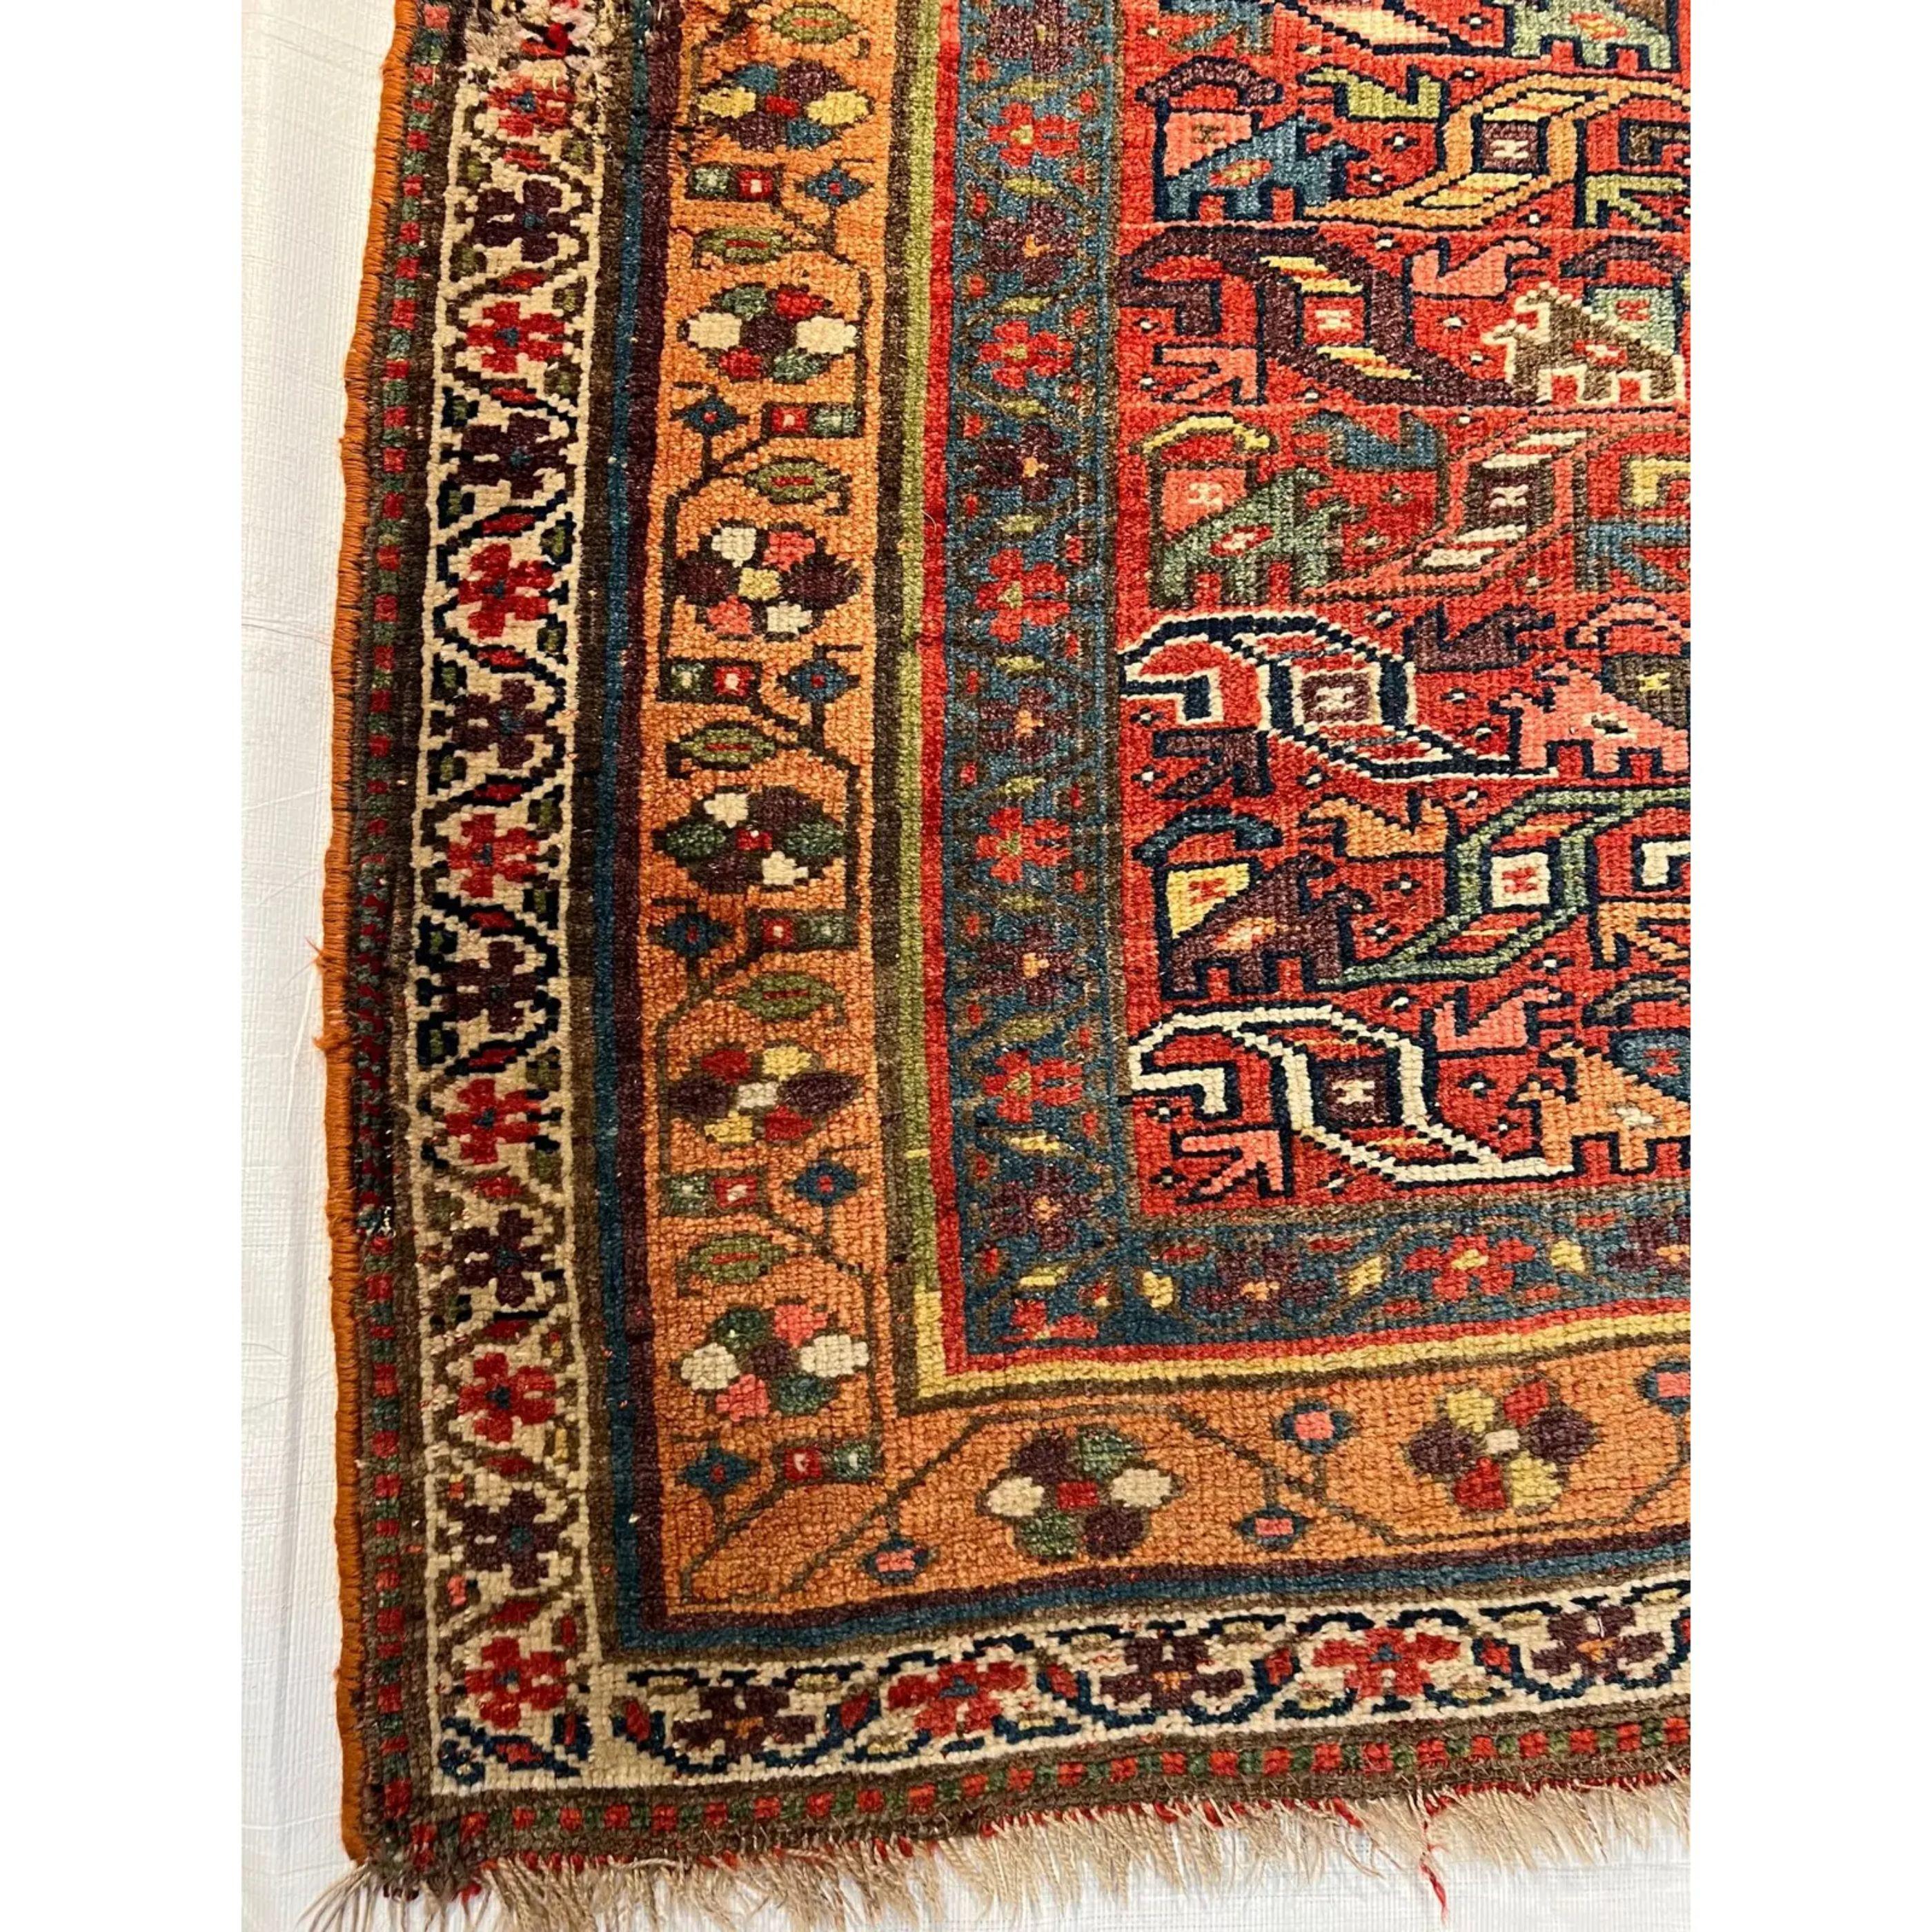 1900s Antique Tribal Persian Bidjar Rug, handmade and hand-knotted carpet